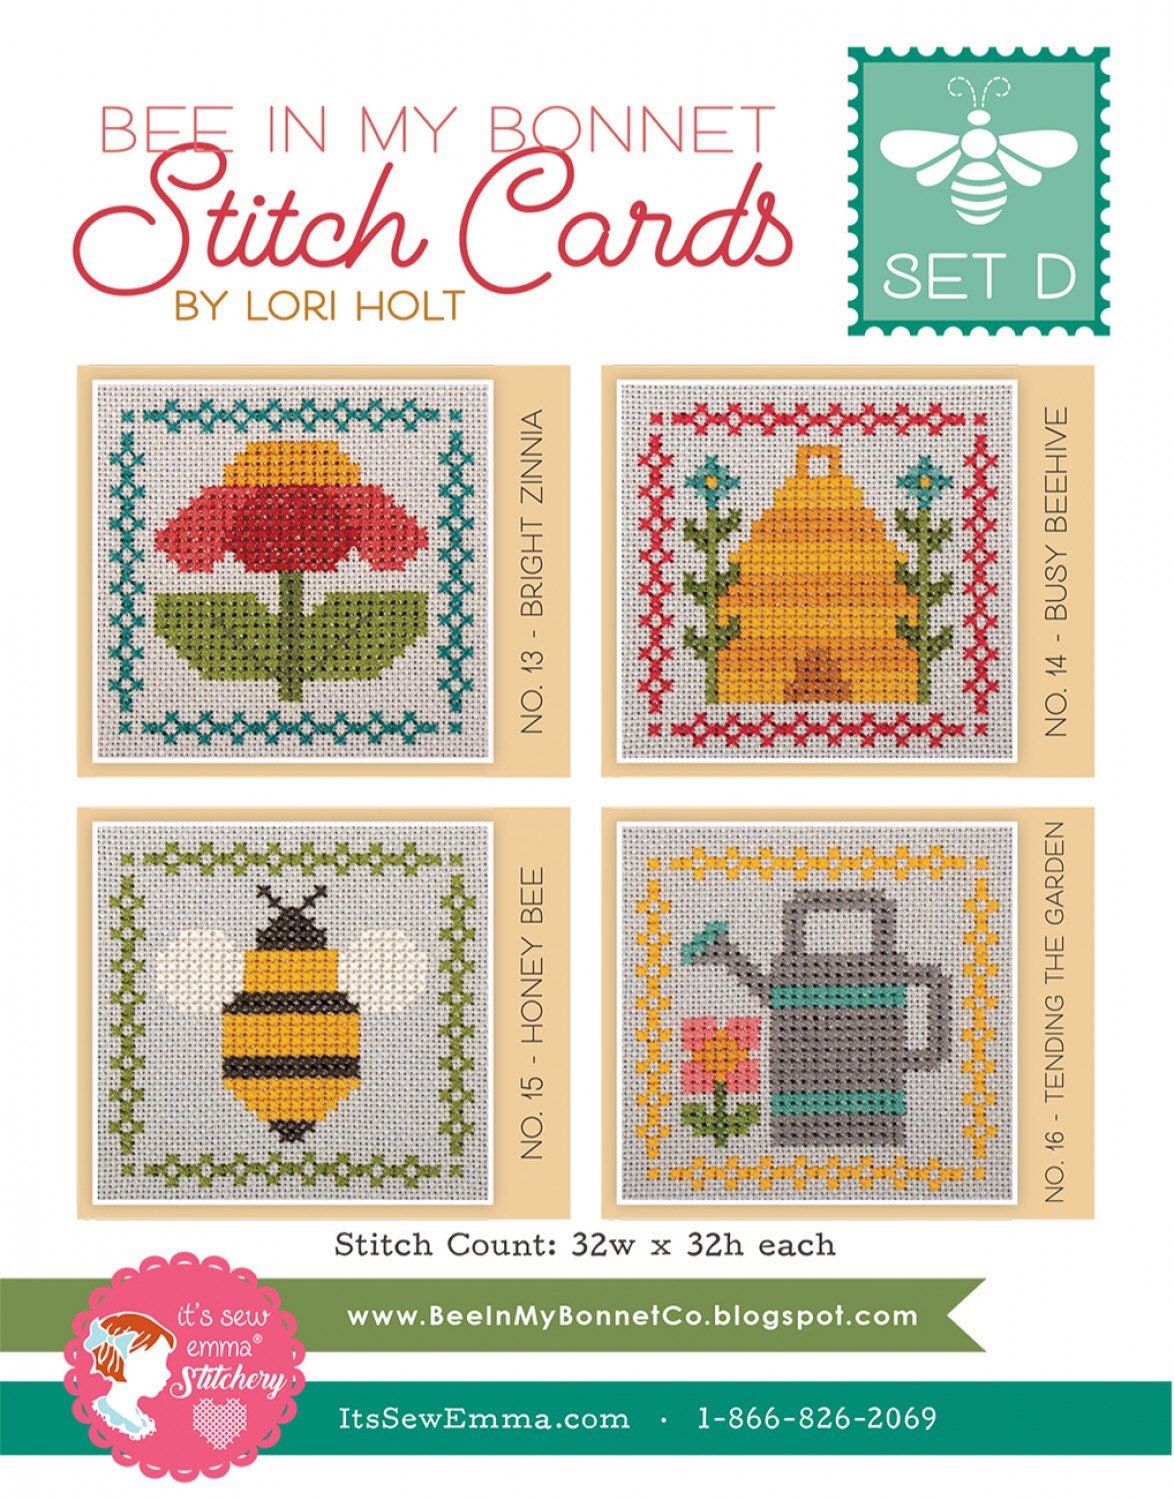 Stitch Cards Set D - Cross Stitch Pattern - It’s Sew Emma - Lori Holt - Bee In My Bonnet